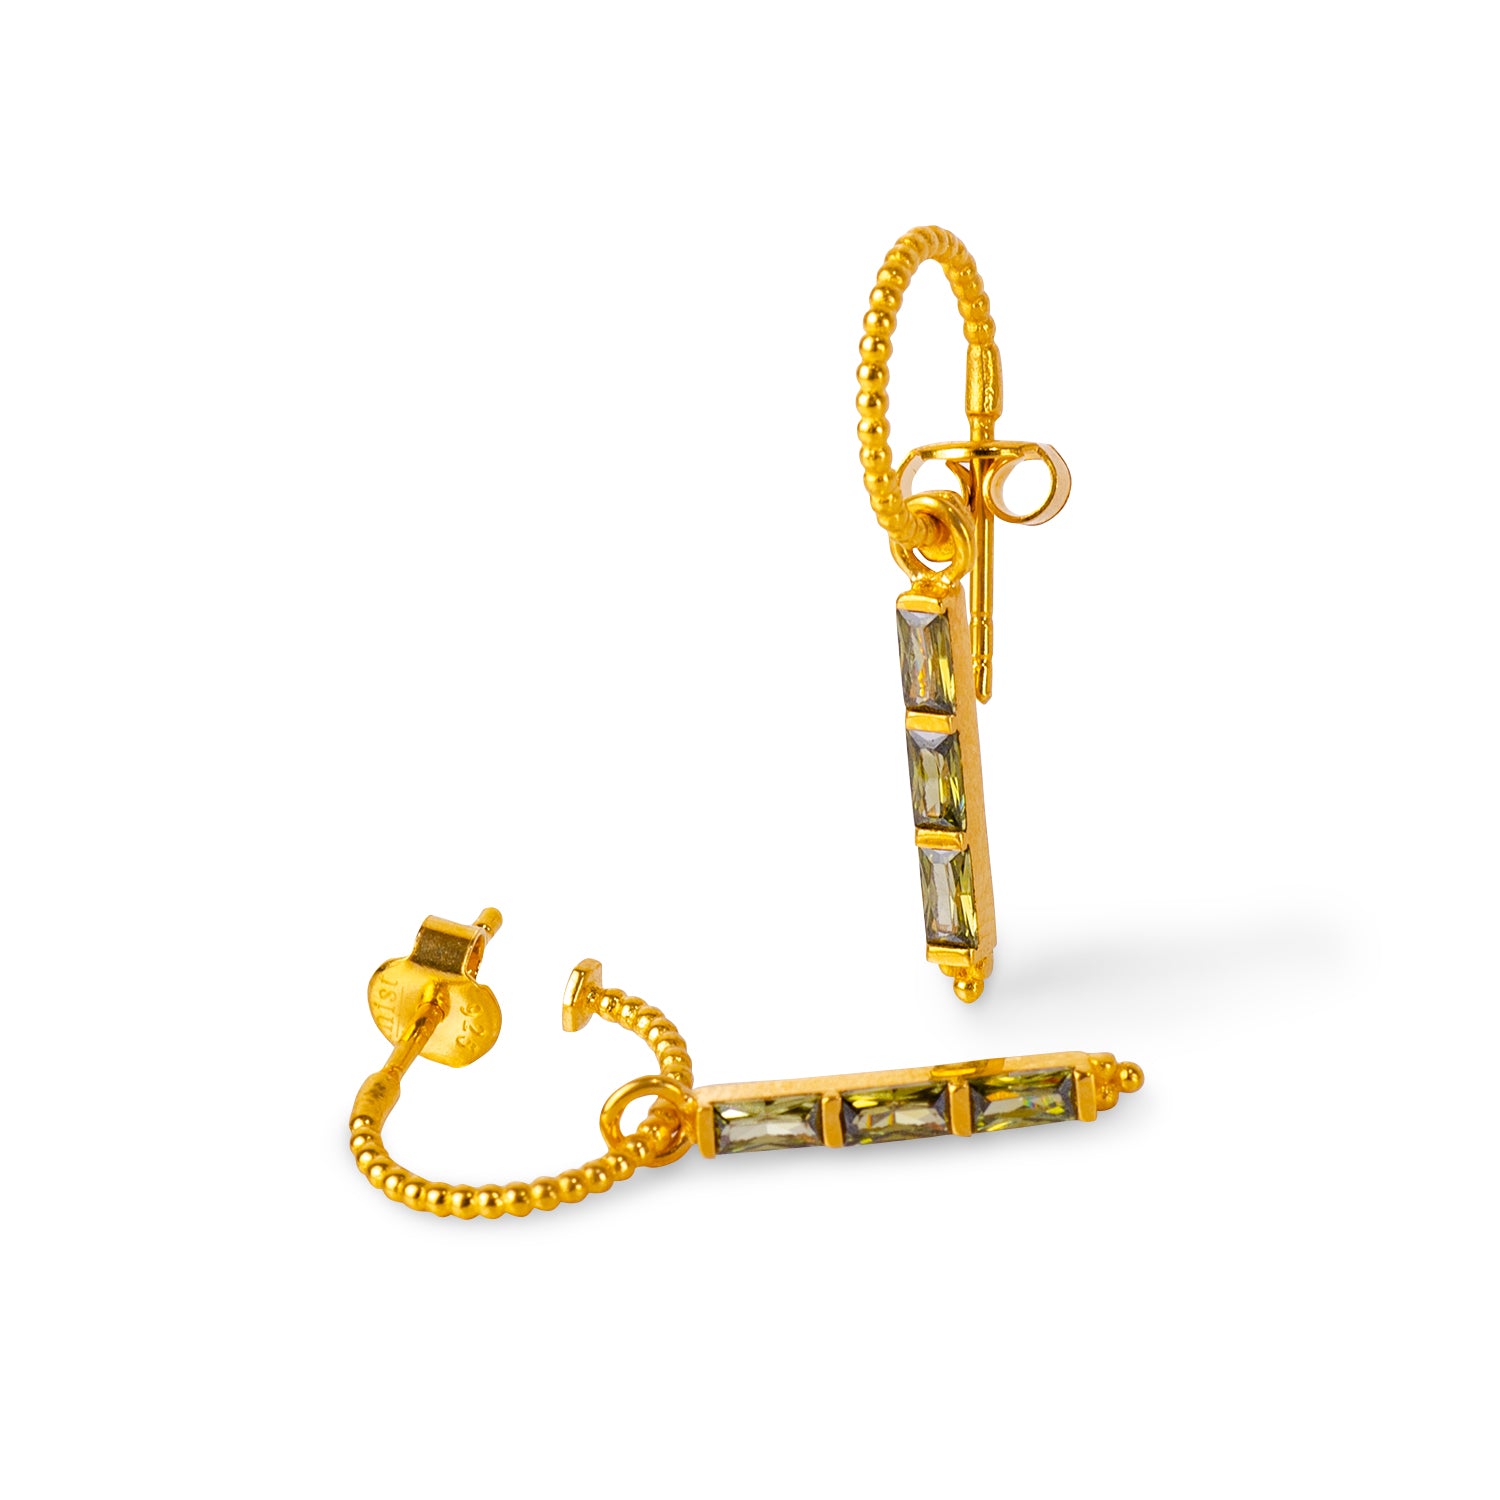 Theodora Green Quartz 24K Gold Earrings - Gold Vermeil Earrings - Pretland | Spiritual Crystals & Jewelry